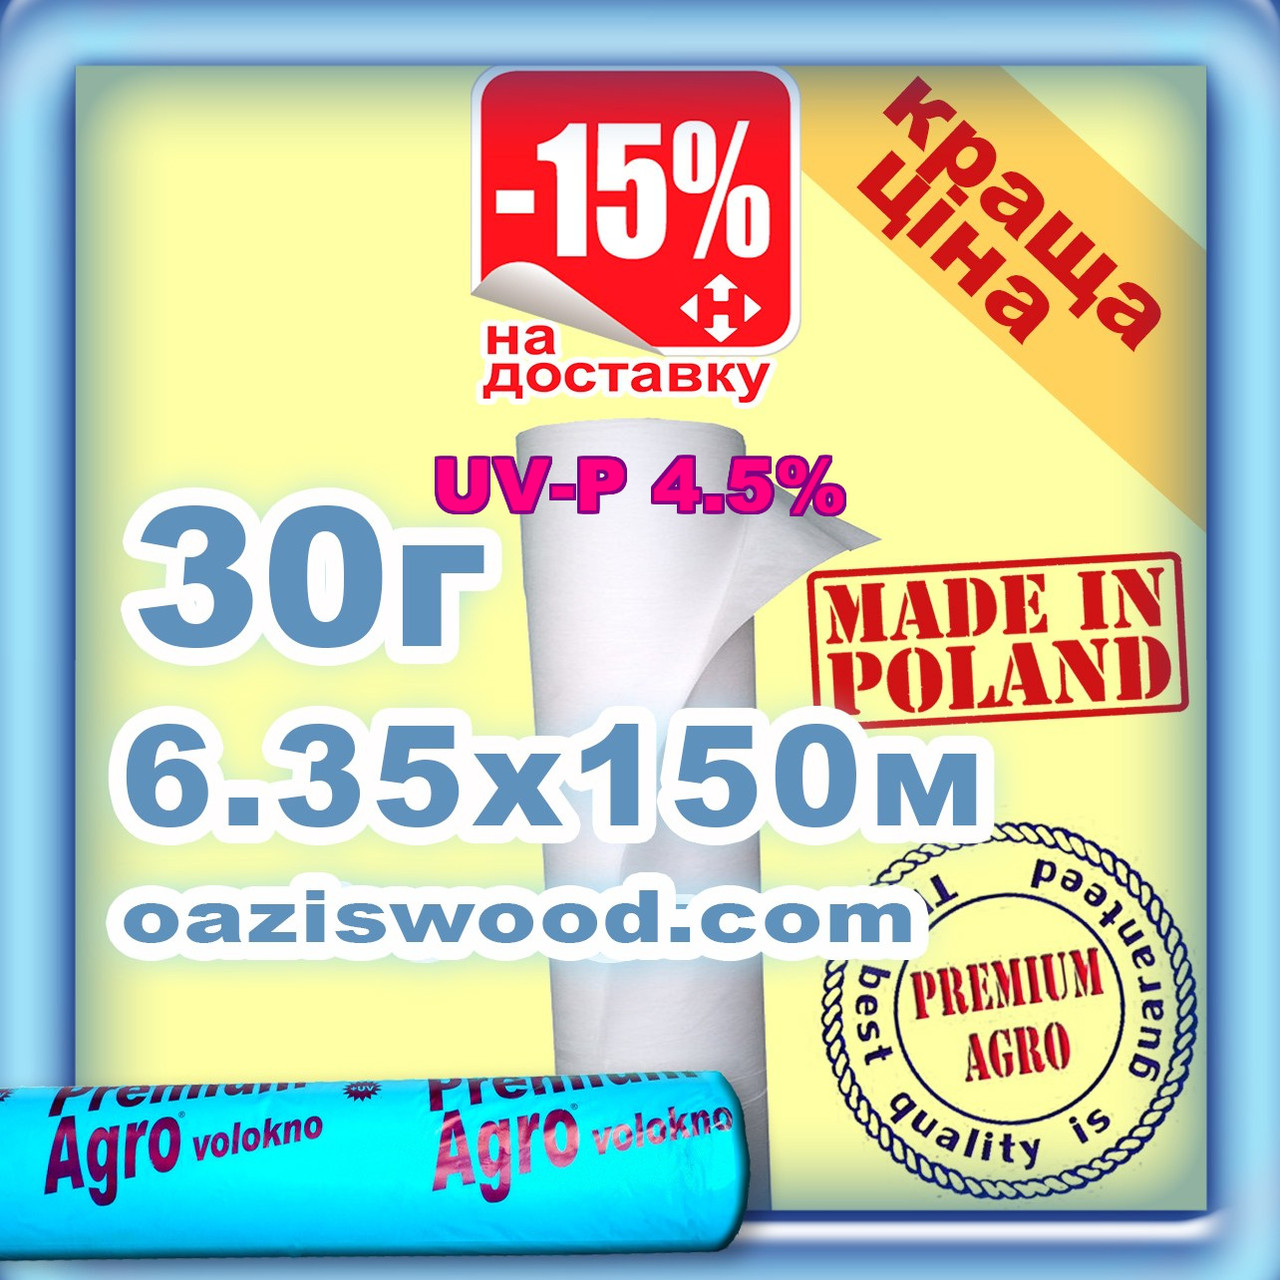 Агроволокно р-30g 6.35*150м біле UV-P 4.5% Premium-Agro Польща